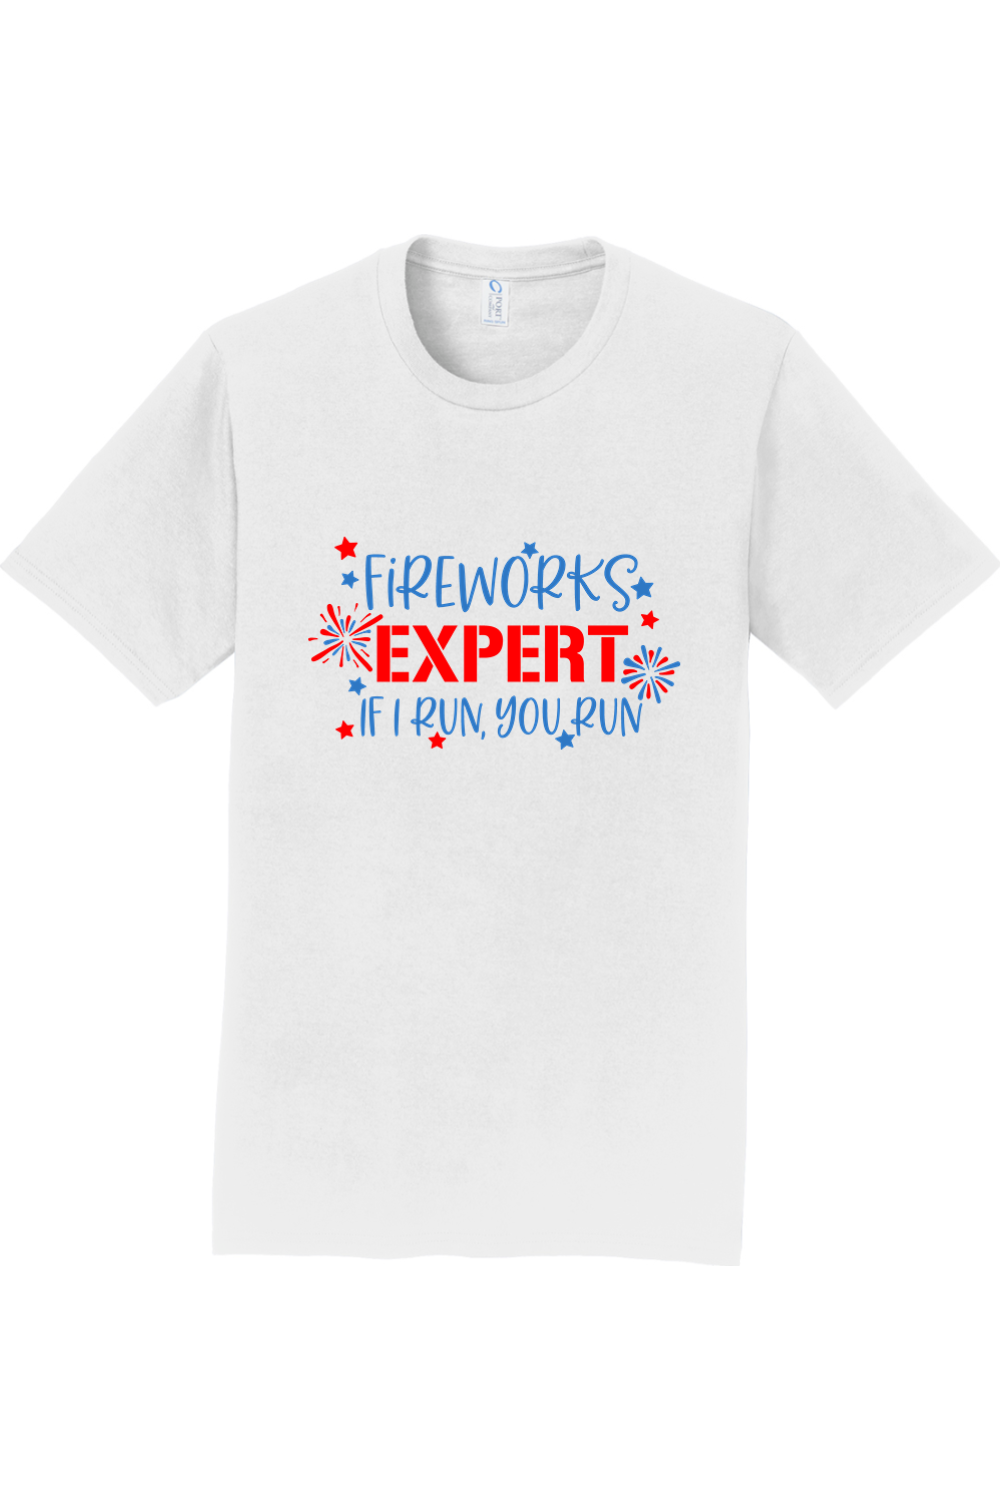 Fireworks Expert If I Run You Run | Mens & Ladies Classic T-Shirt